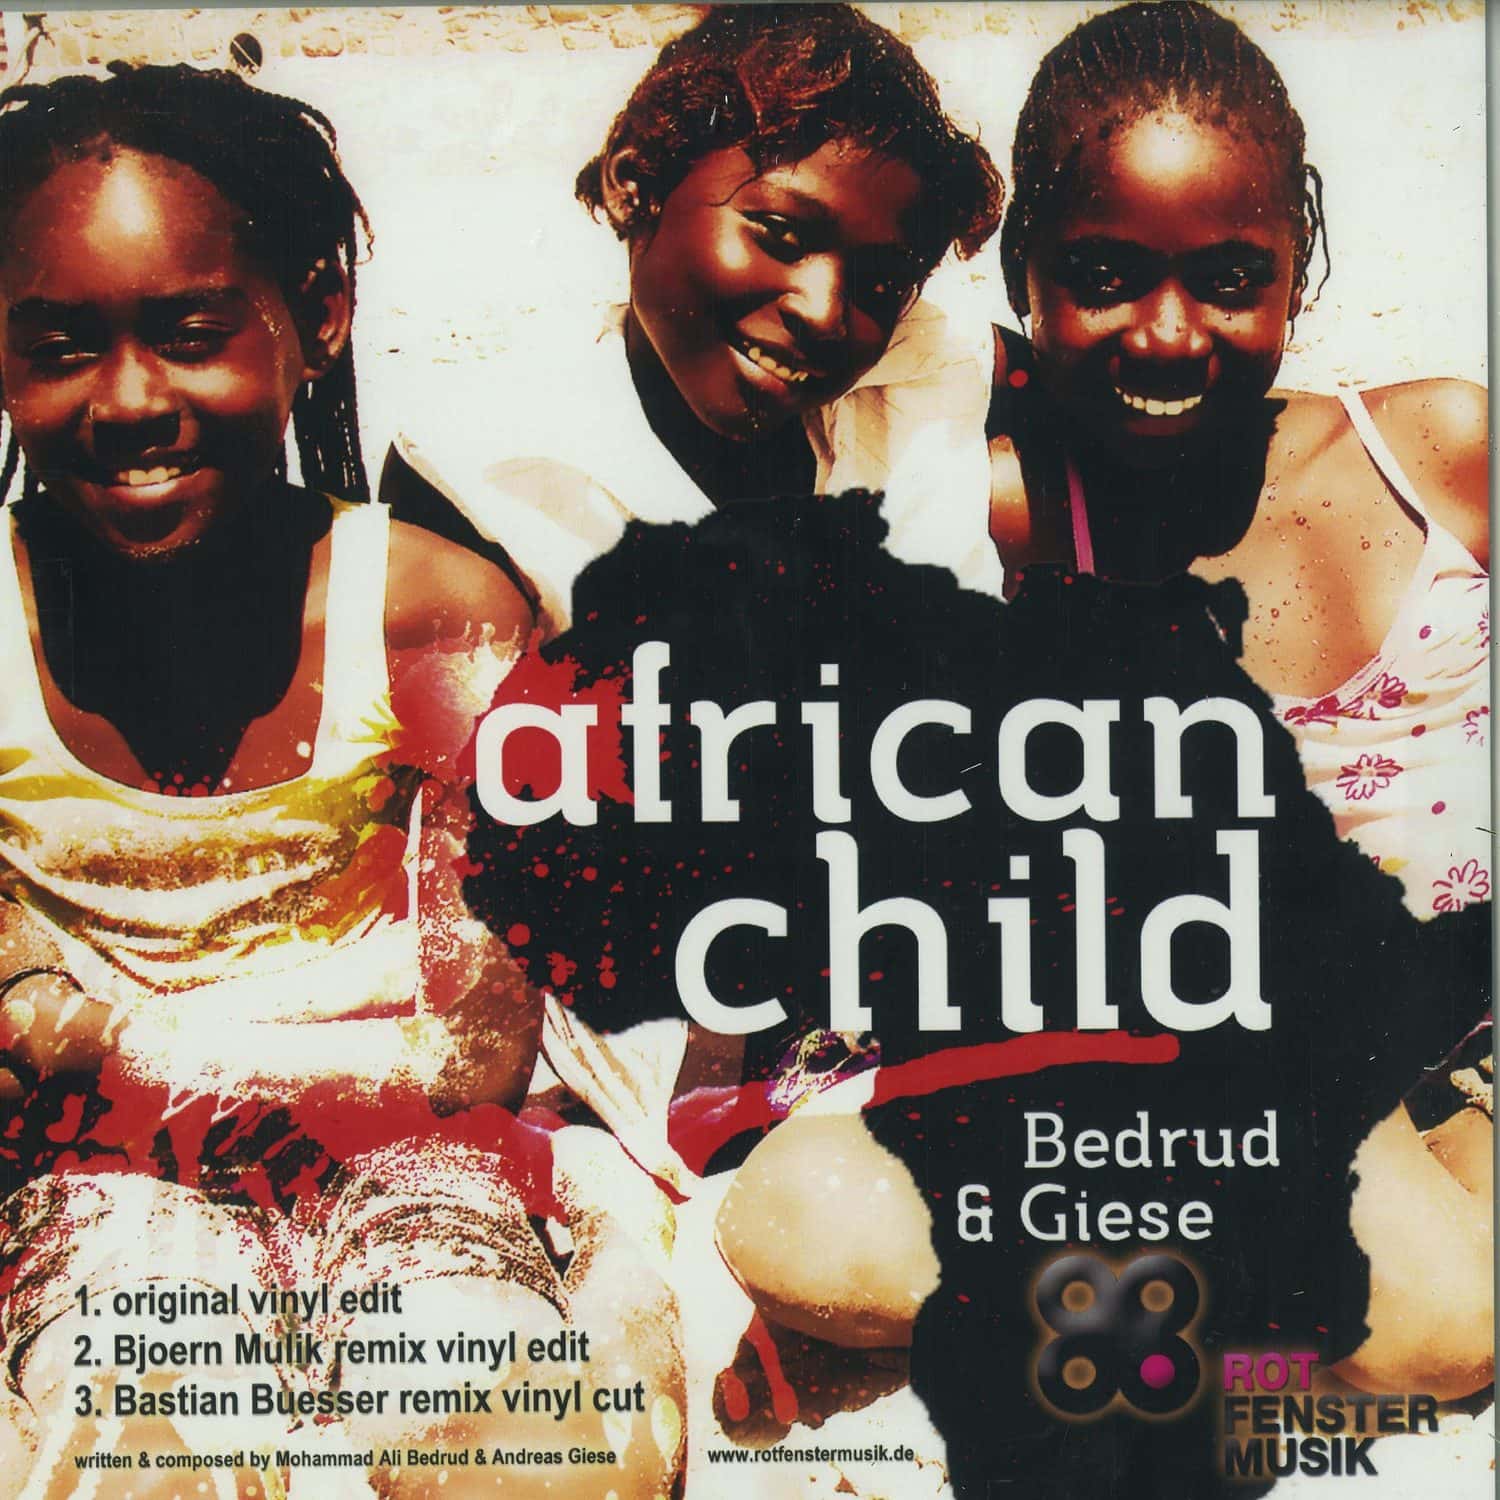 Bedrud & Giese - AFRICAN CHILD